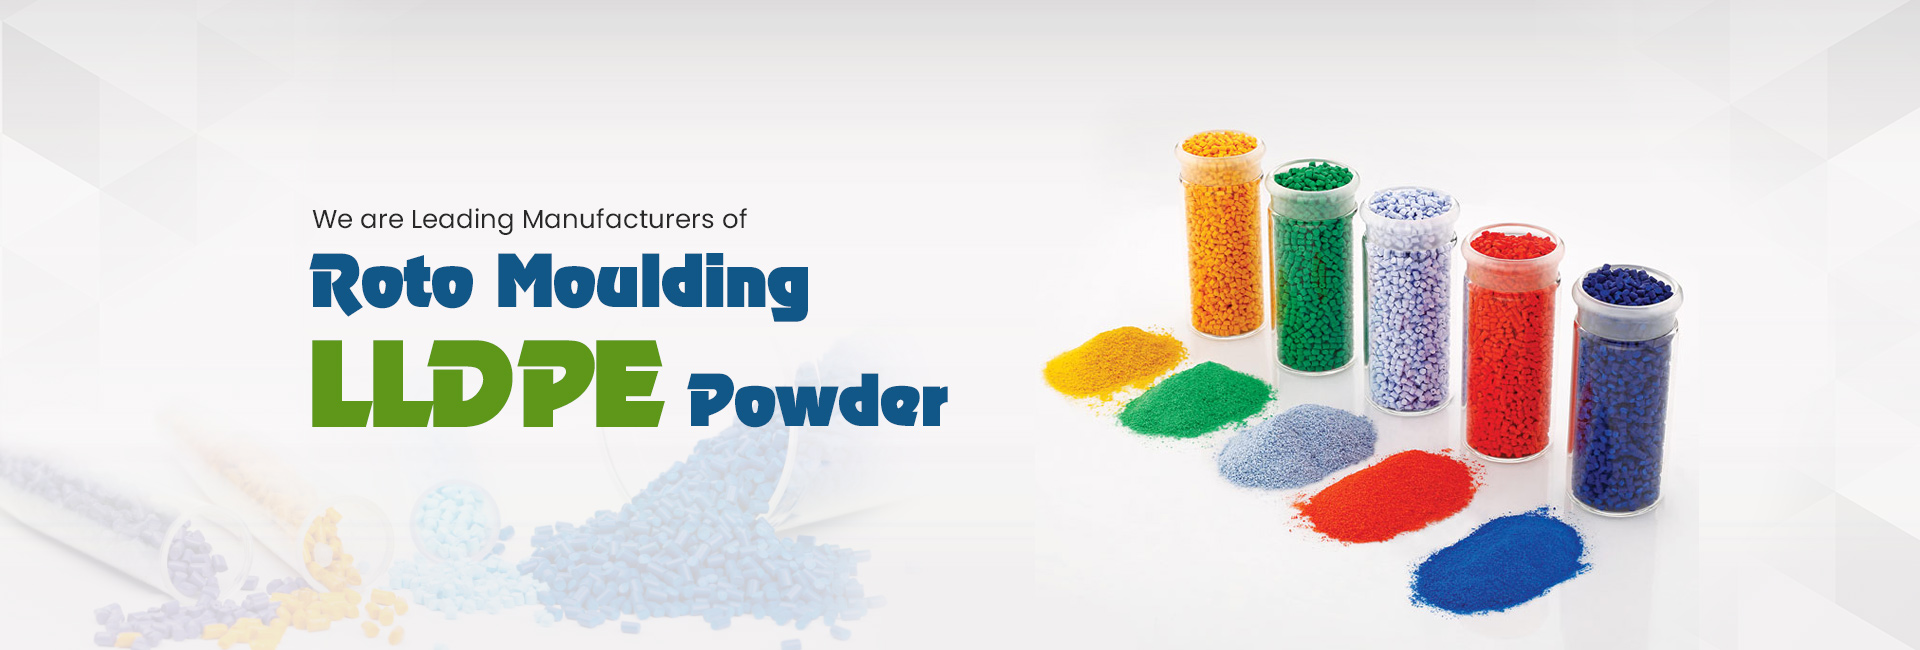 rotomoulding powder manufacturers